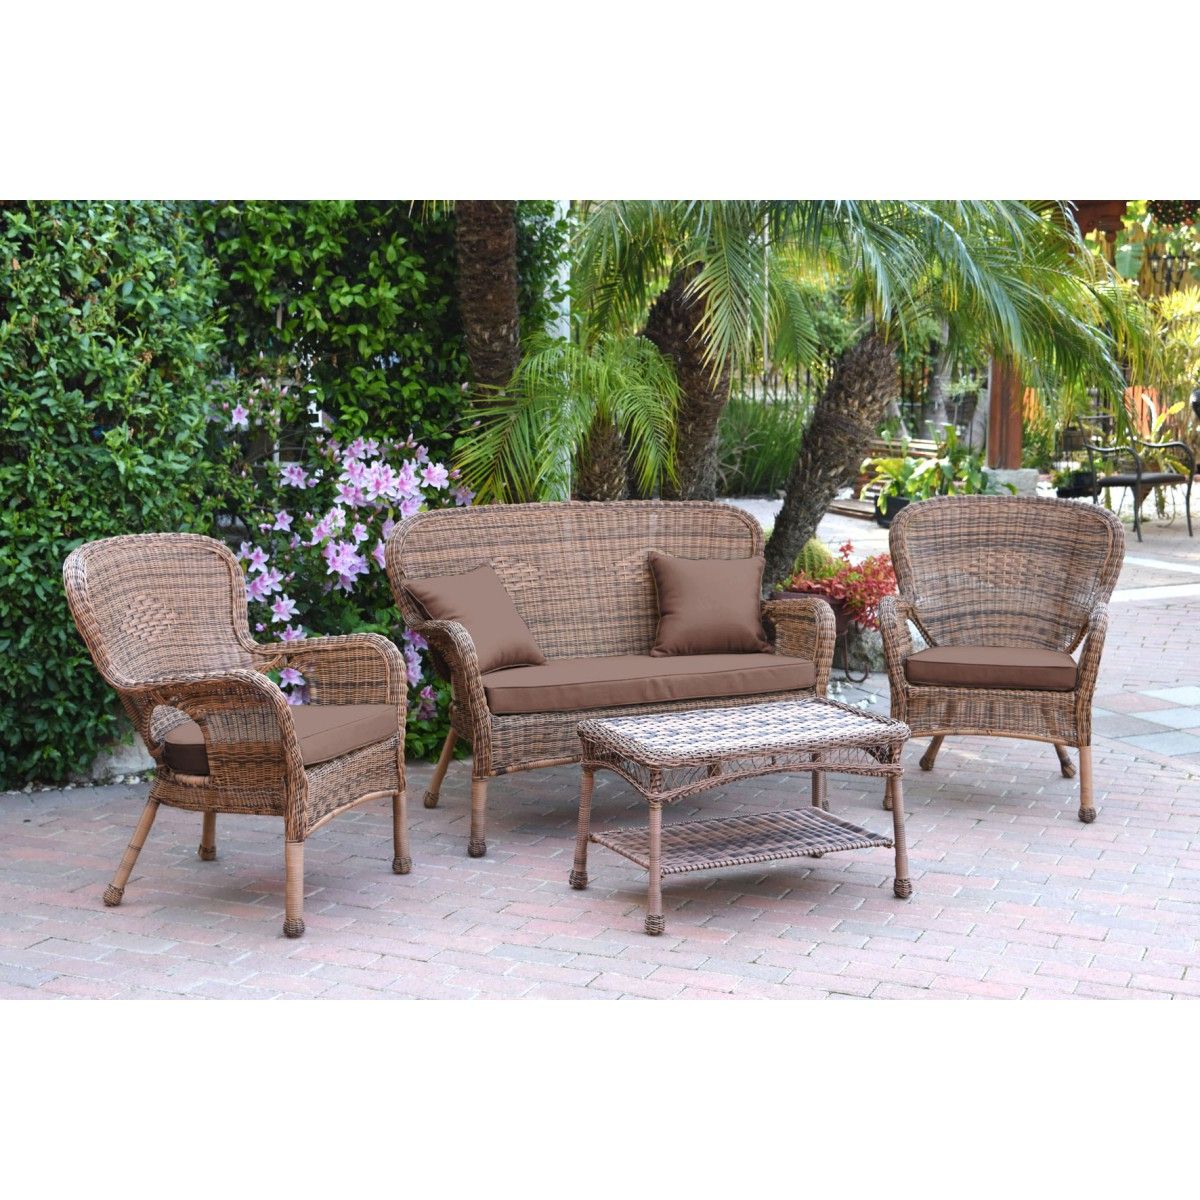 Popular 4pc Windsor Honey Wicker Conversation Set – Brown Cushions With Regard To Brown Patio Conversation Sets With Cushions (View 1 of 15)